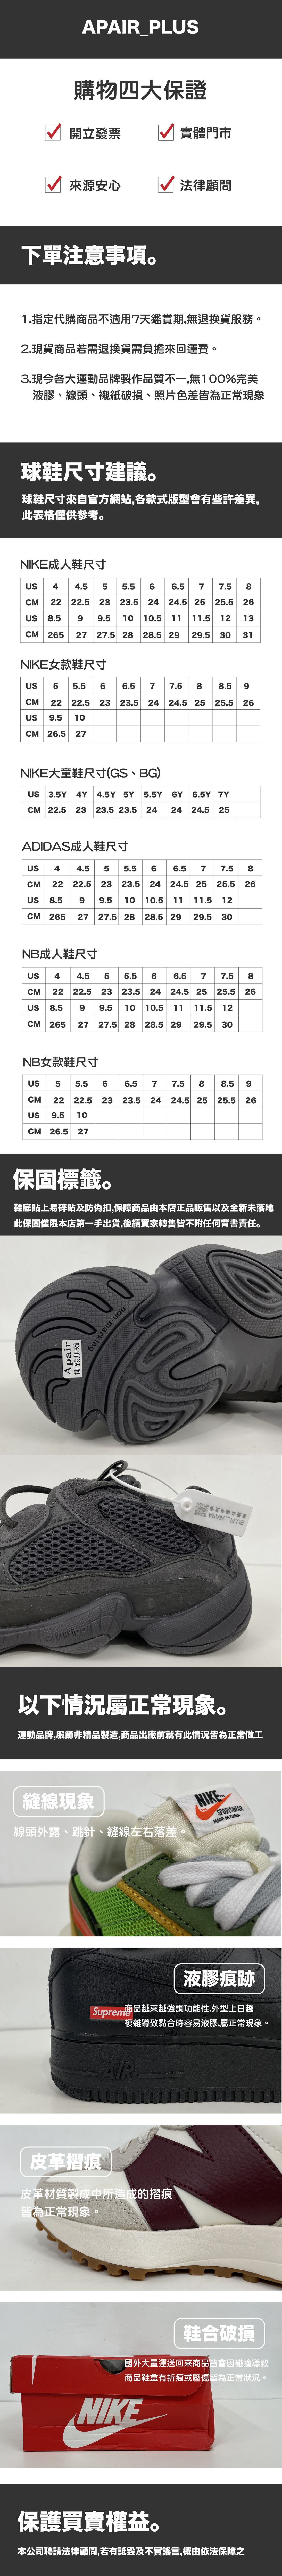 APAIR預購Adidas Originals Yeezy Foam Runner "Carbon"碳灰